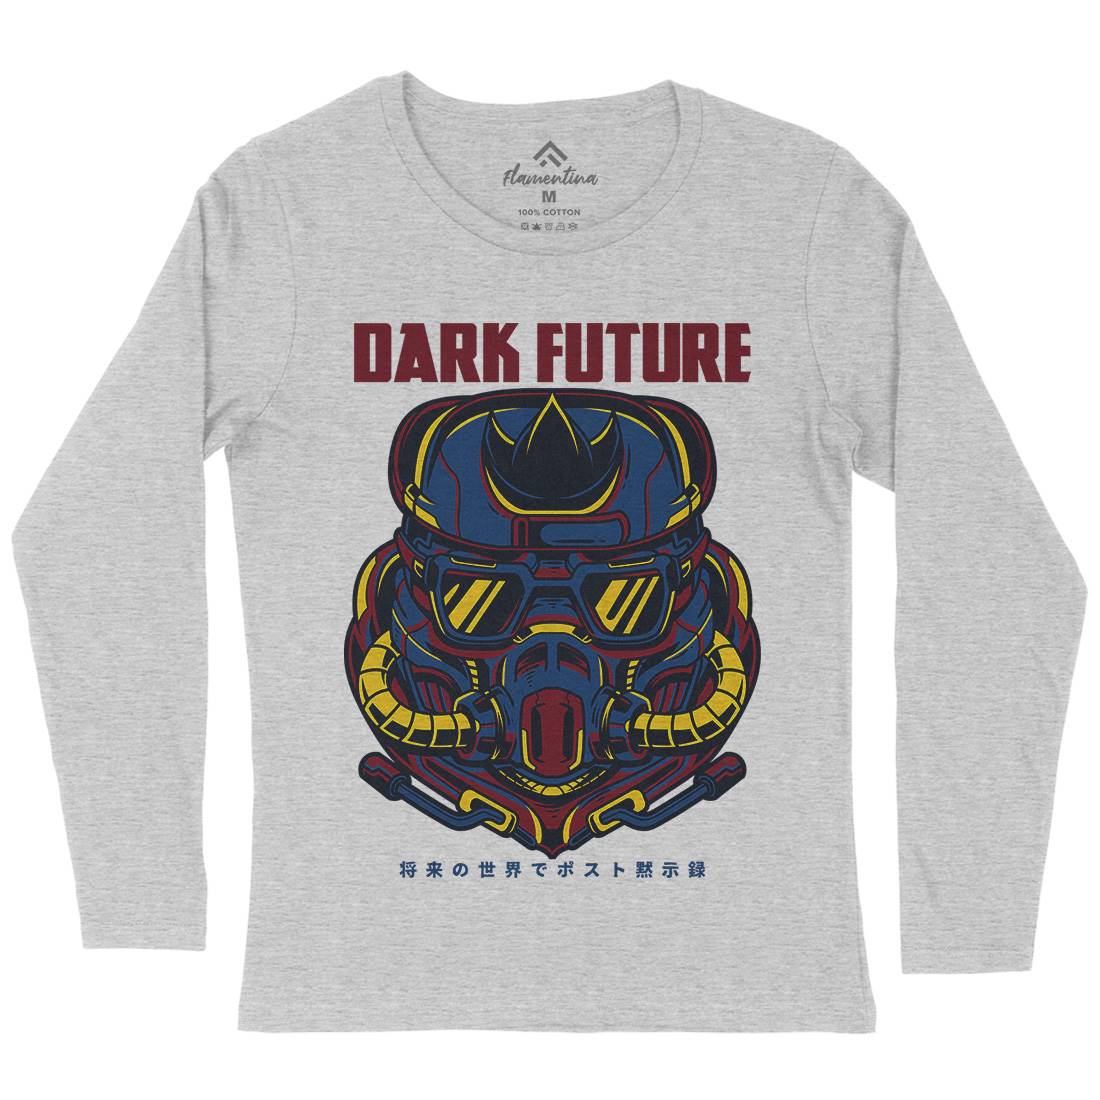 Dark Future Womens Long Sleeve T-Shirt Space D745